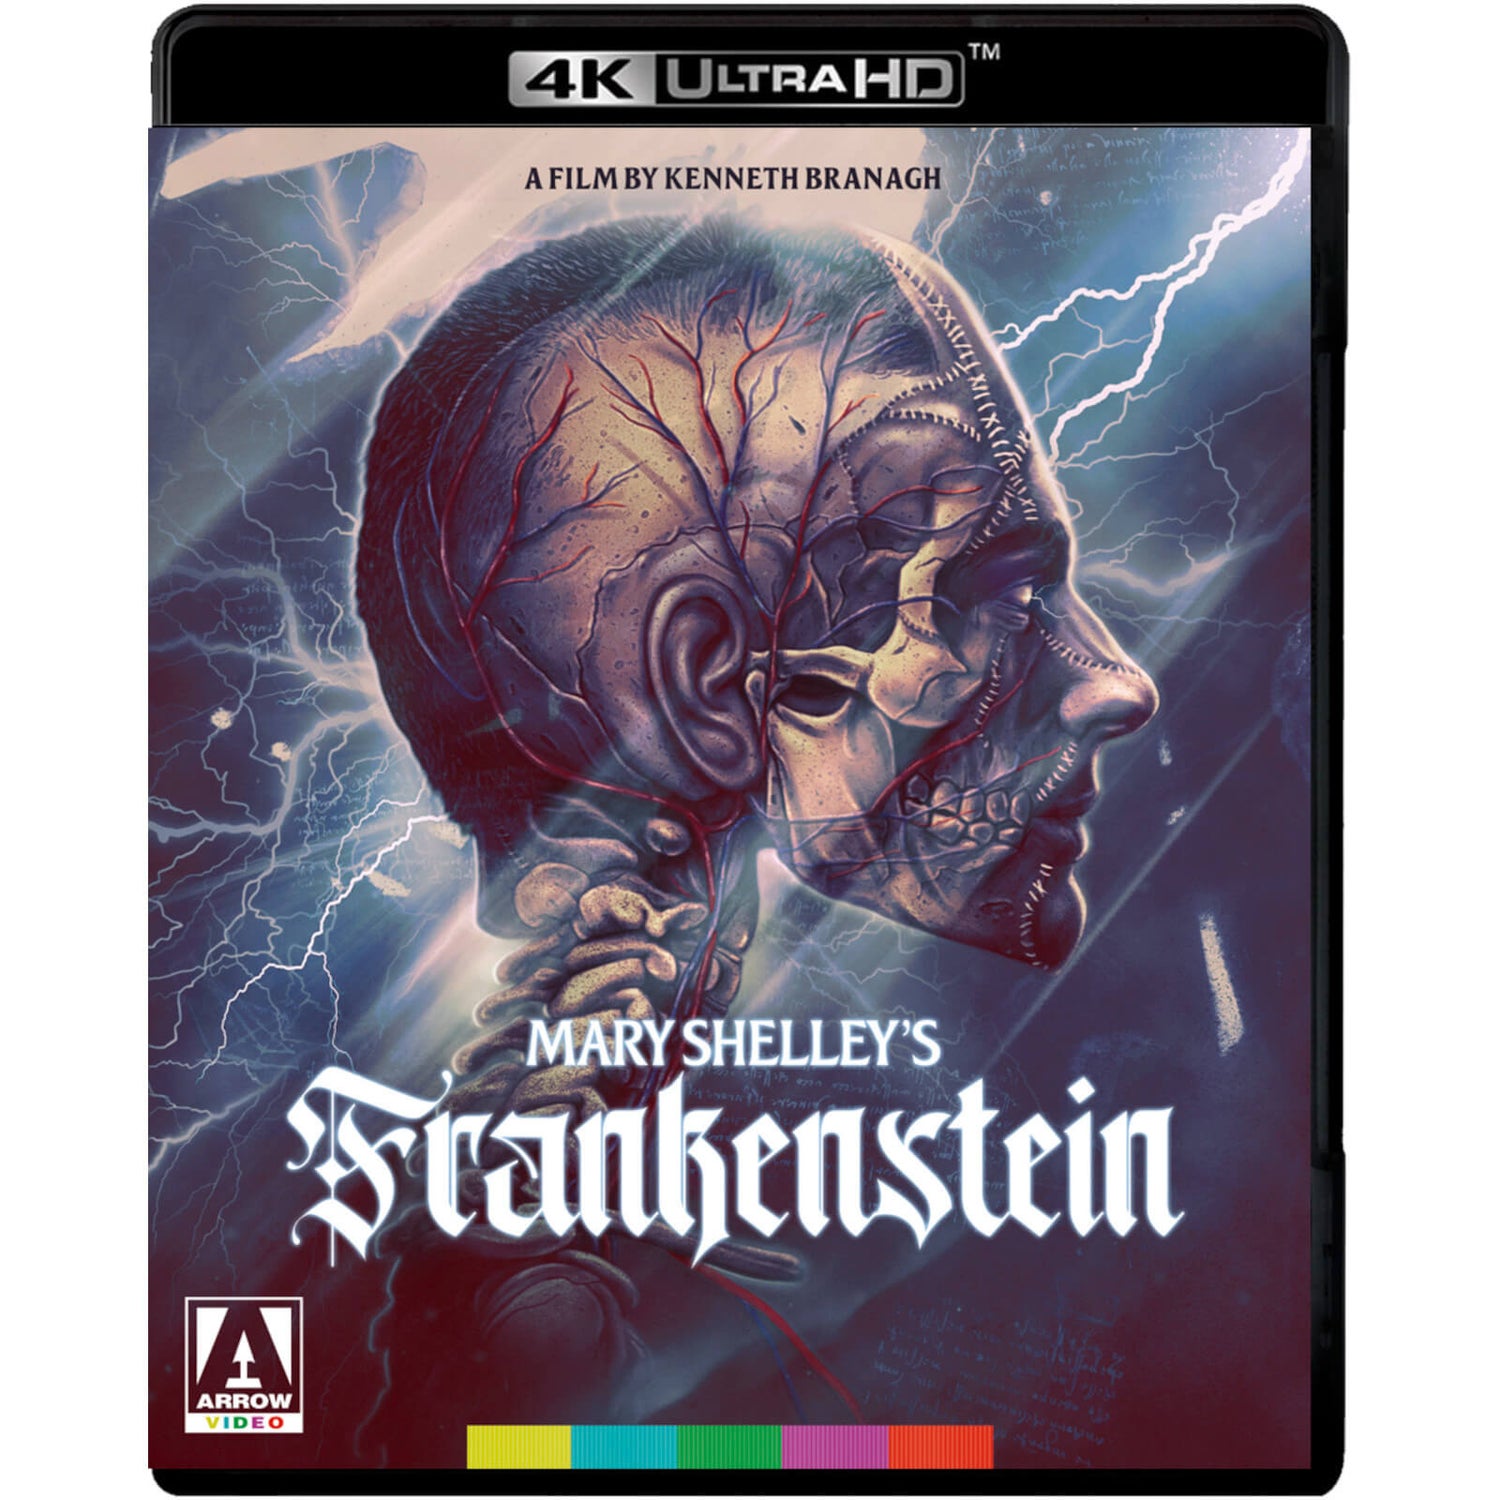 Mary Shelley's Frankenstein 4K UHD